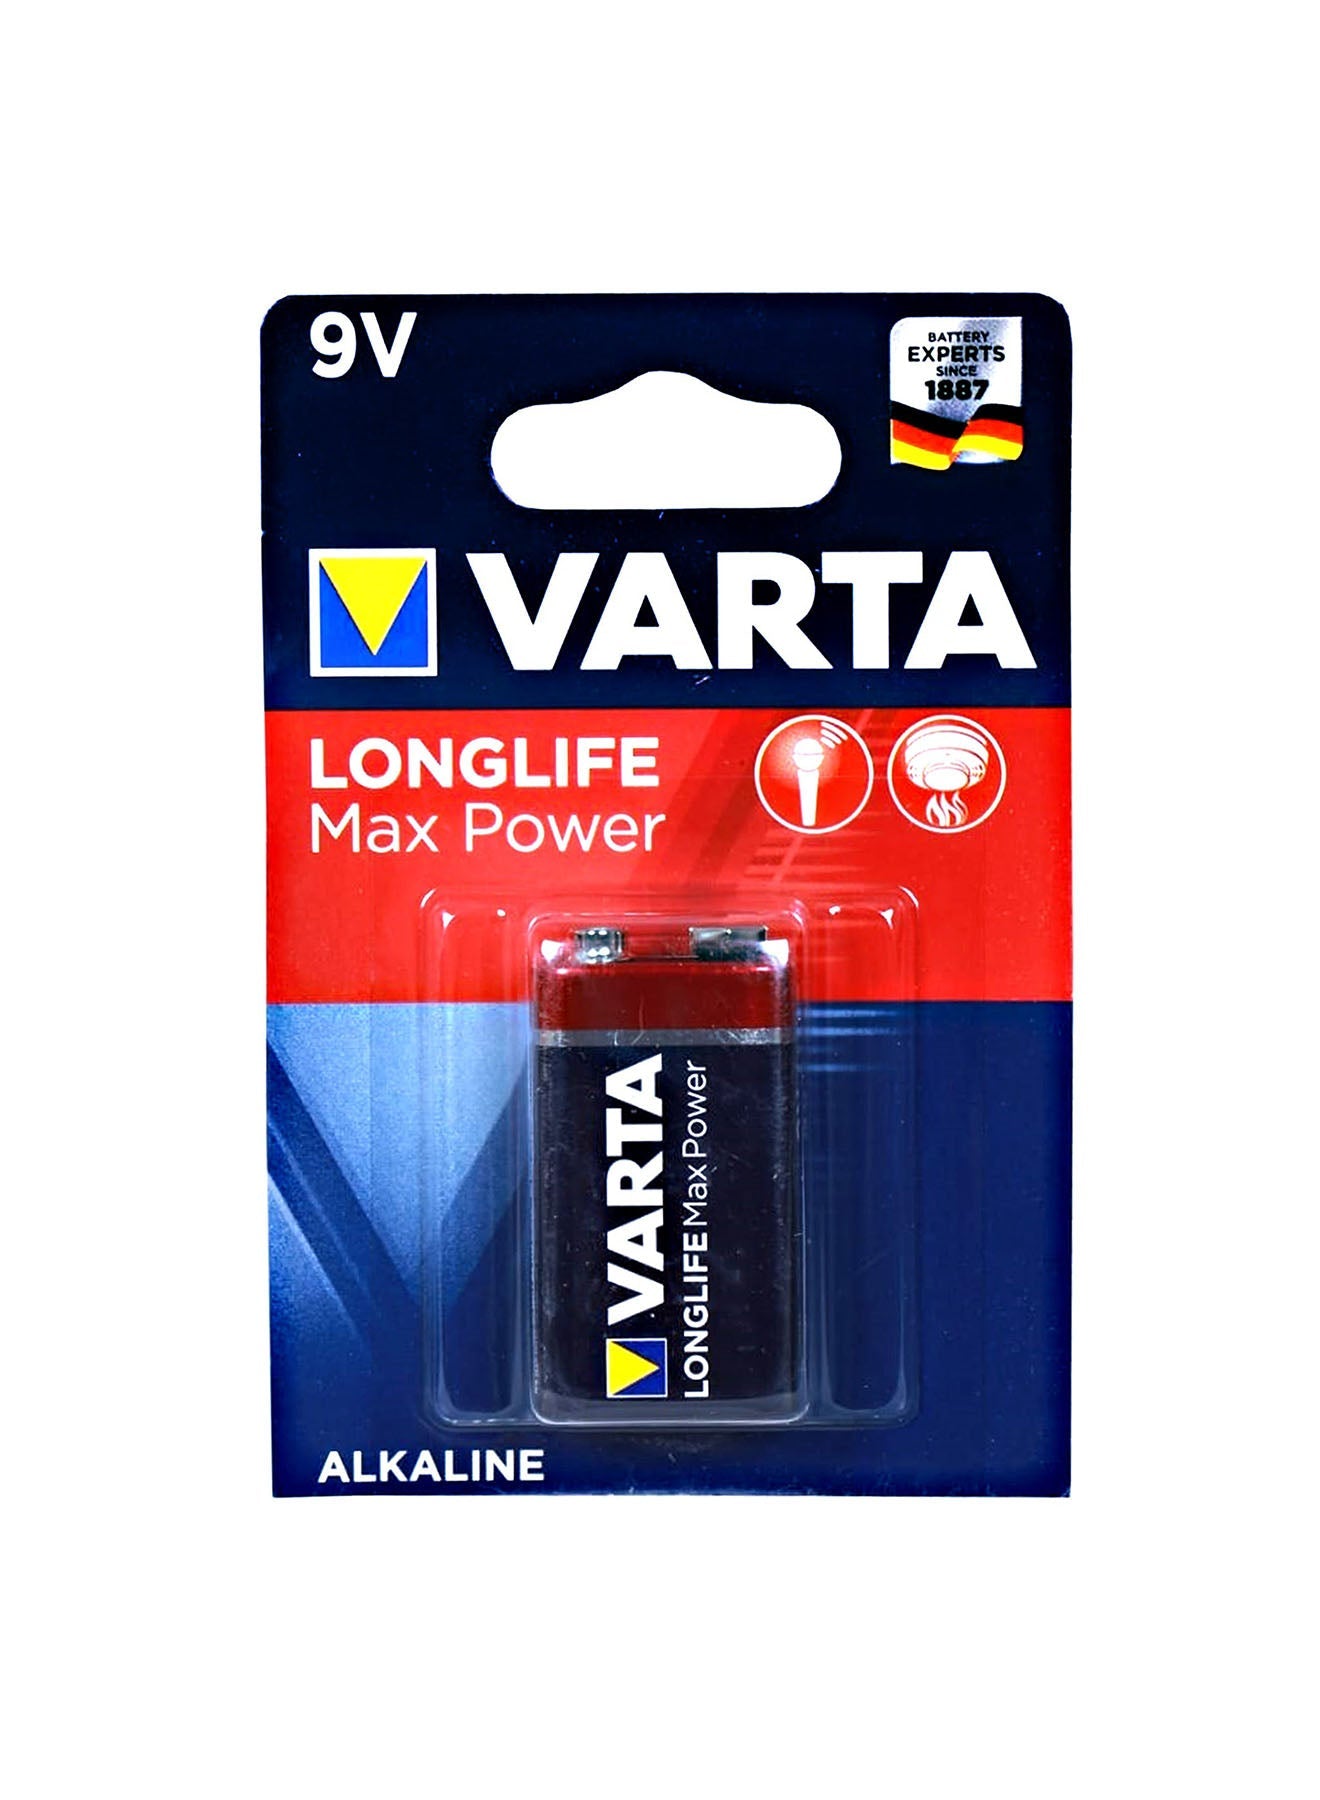 Varta Long Life Max Power 9V Alkaline Battery Value Pack of 3 